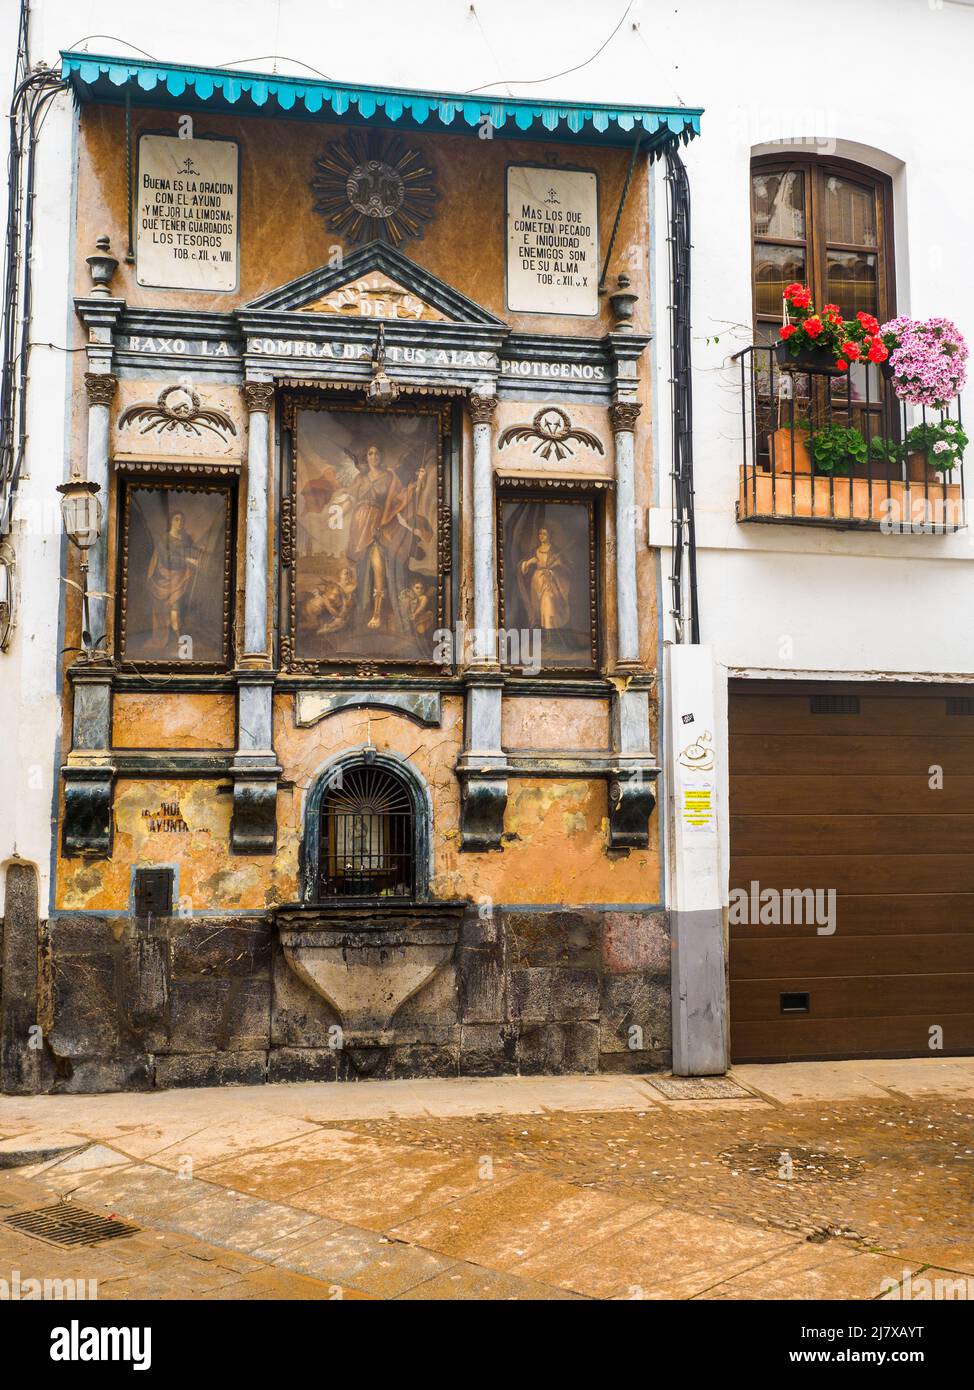 Grande aedicula (niche) dans la rue Lineros - Cordoba, Espagne Banque D'Images